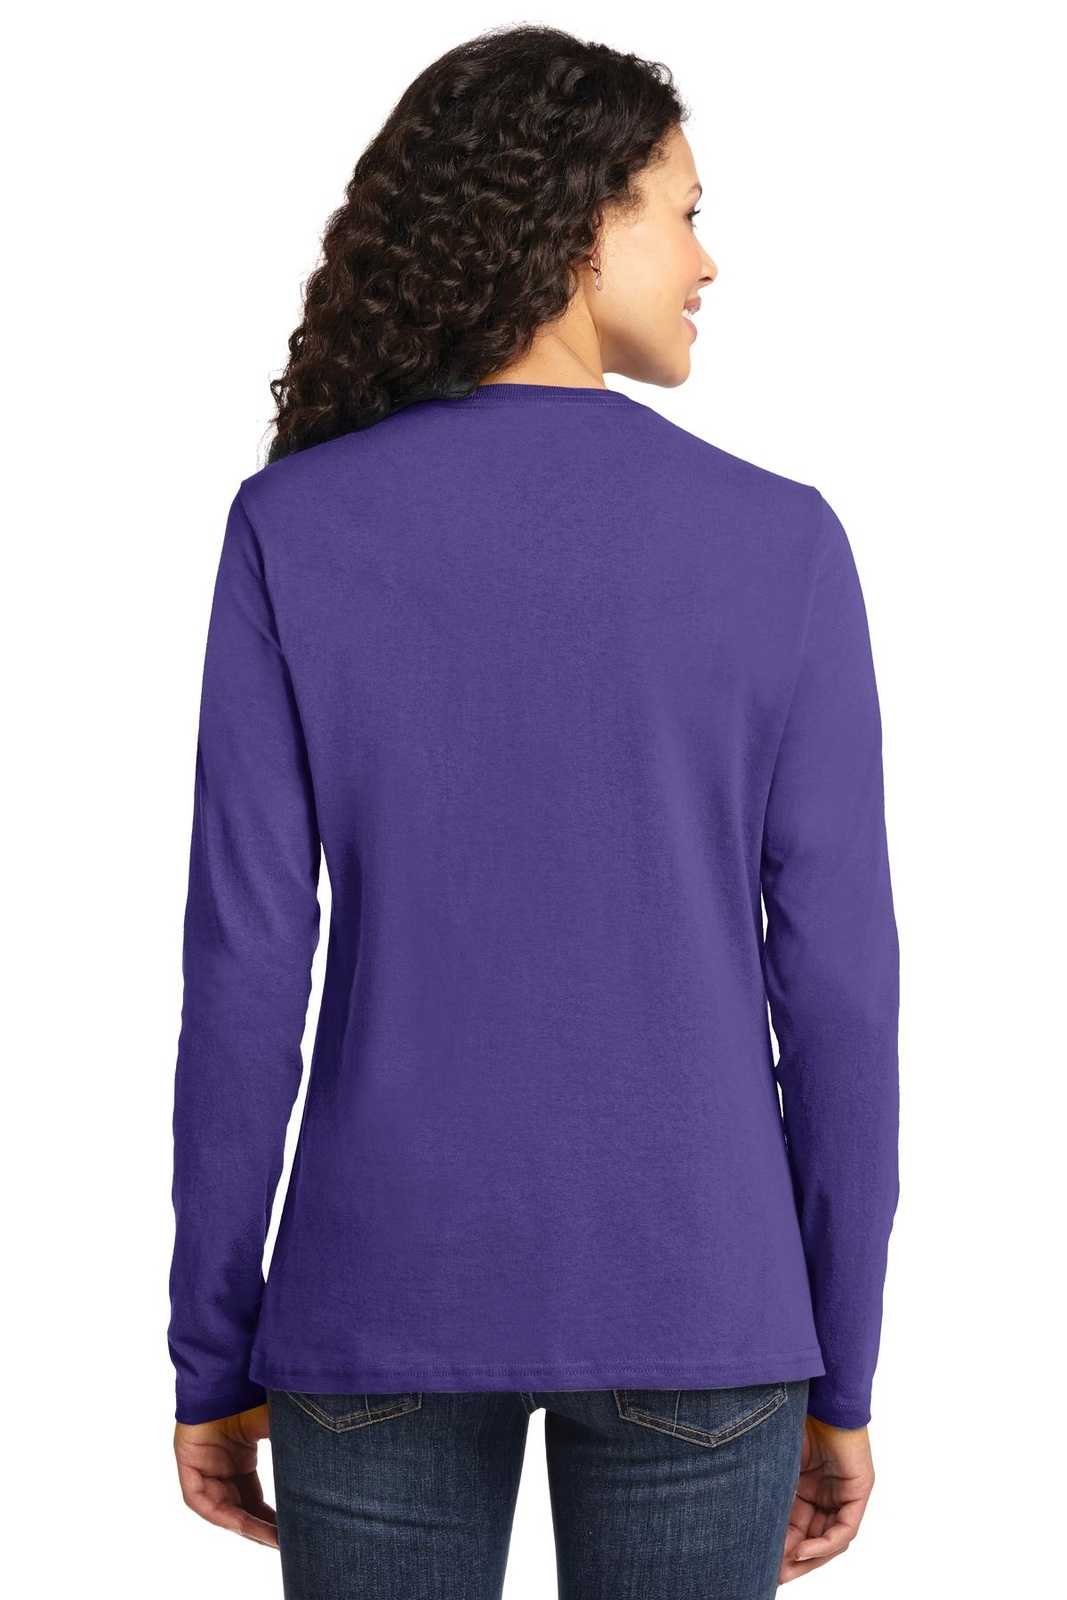 Port &amp; Company LPC54LS Ladies Long Sleeve Core Cotton Tee - Purple - HIT a Double - 2